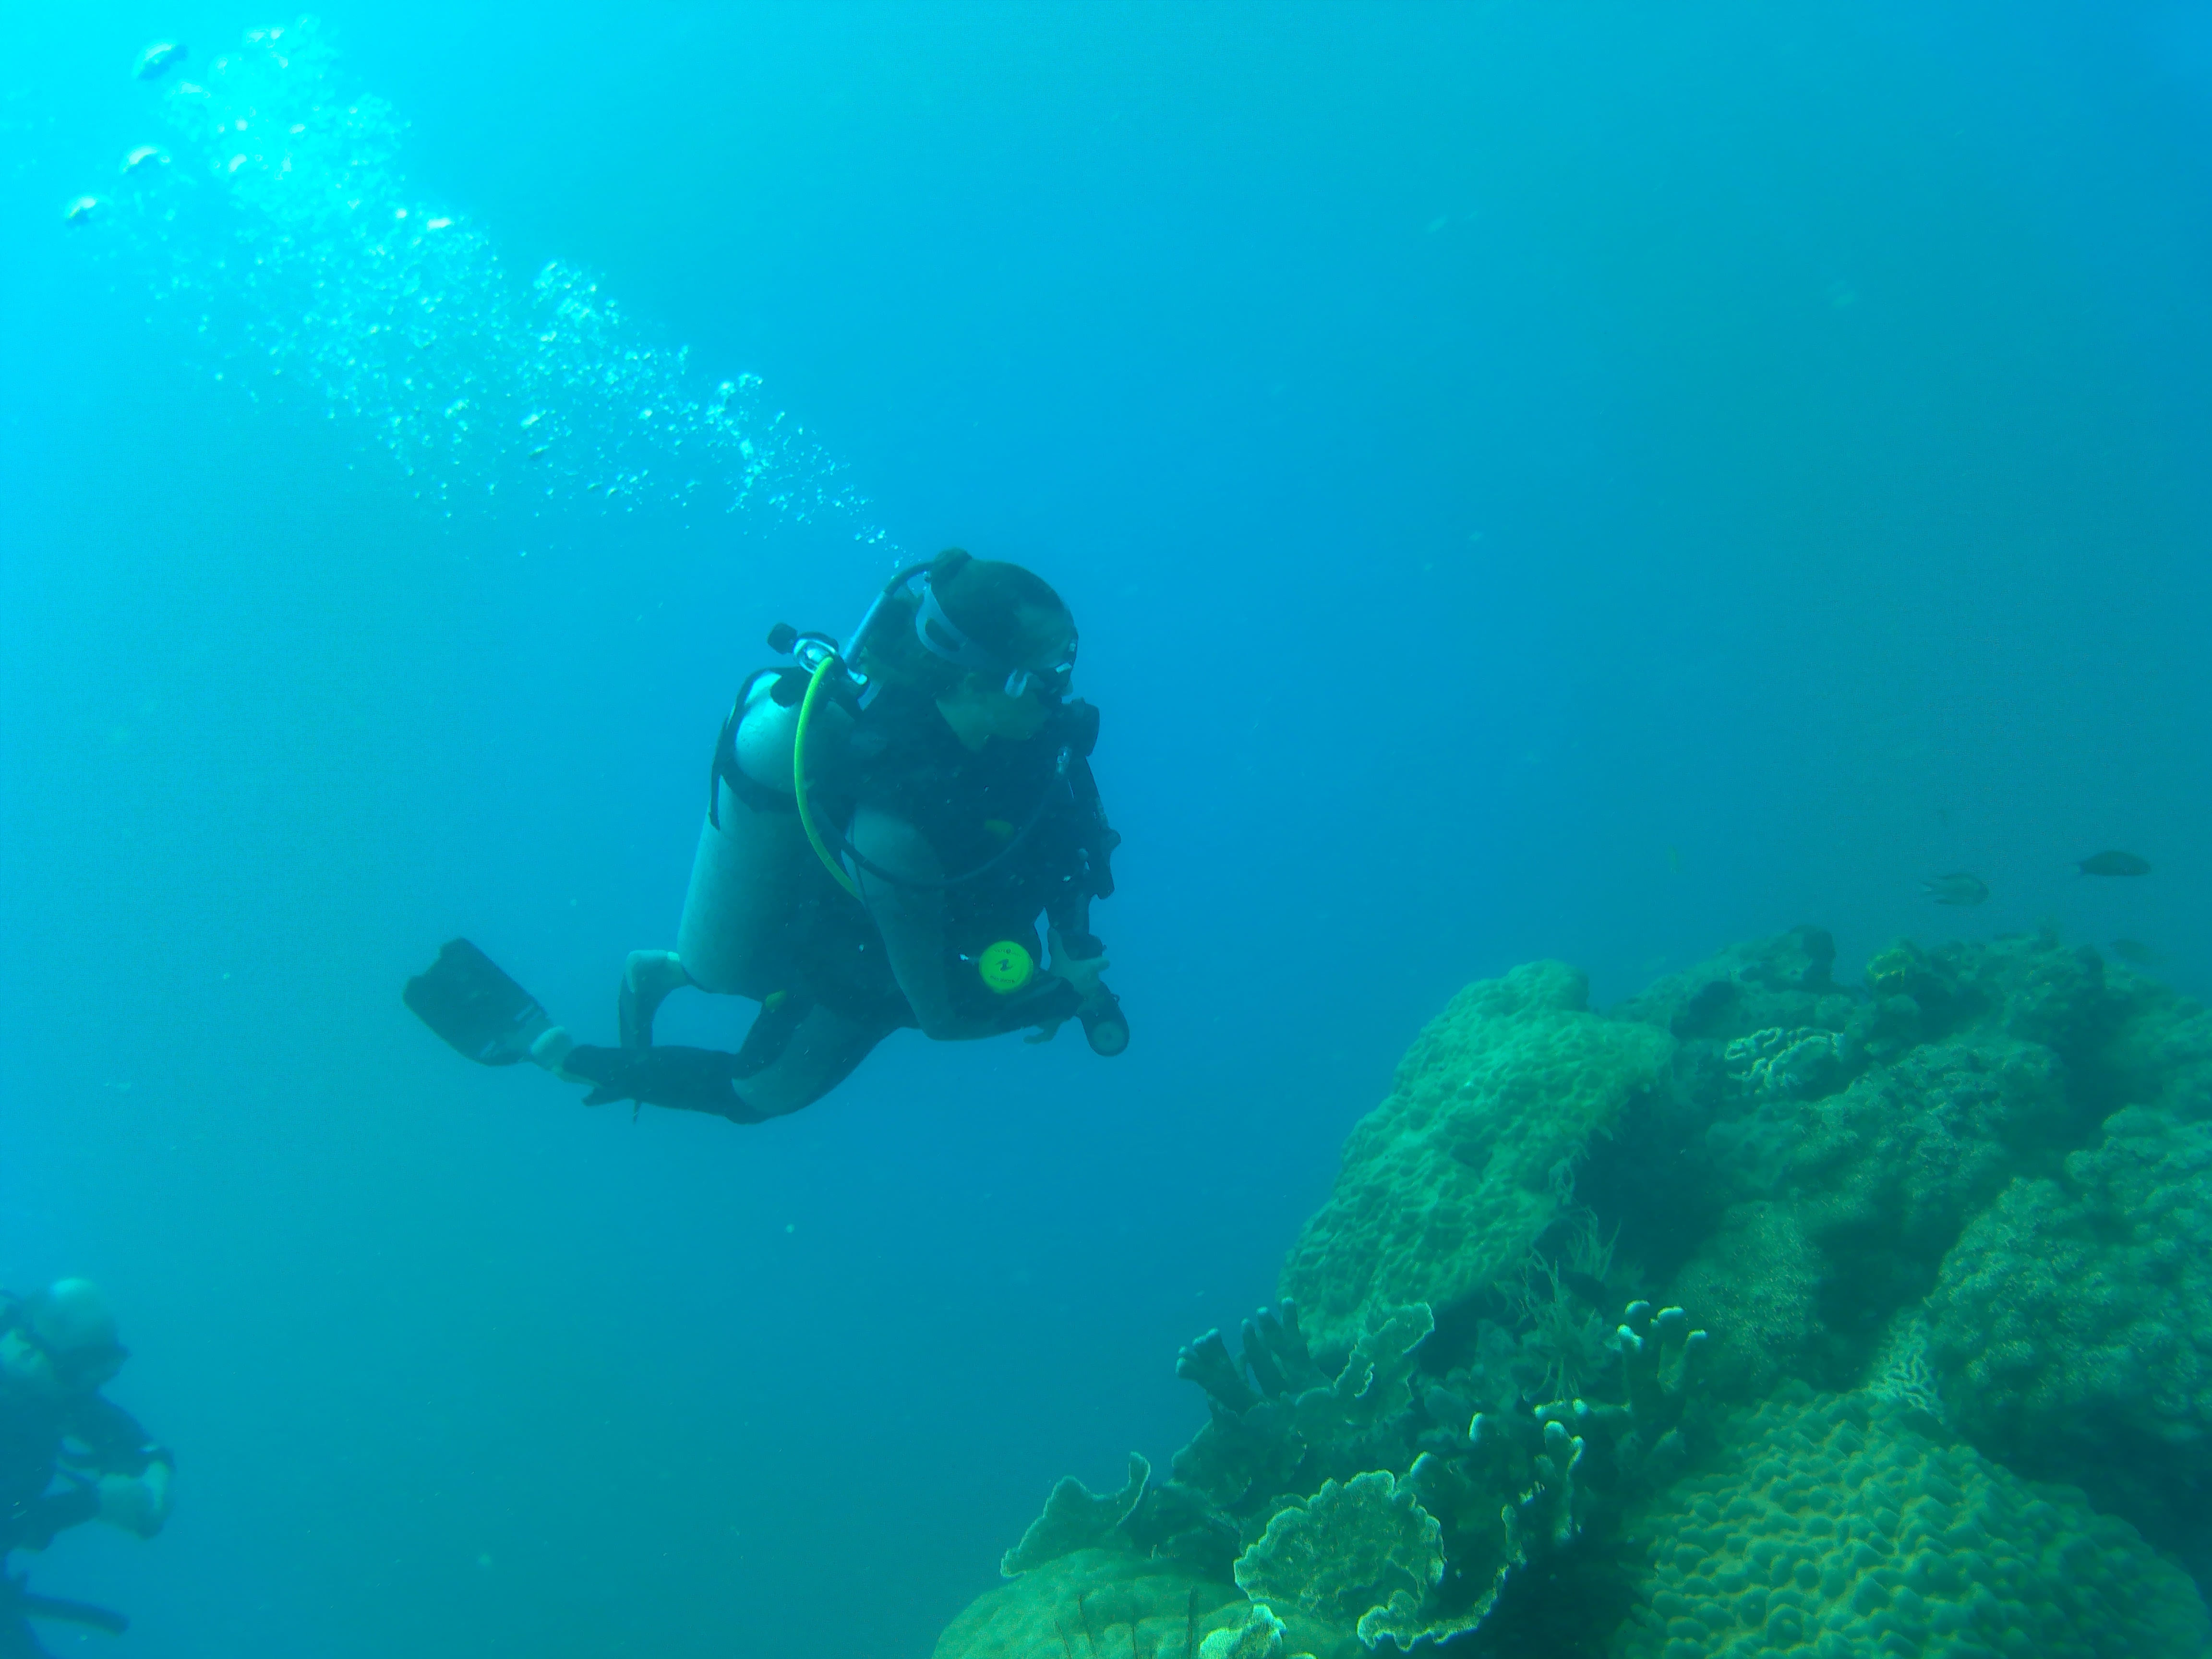 Private day tour diving Karimunjawa - 2 dives - 1 person